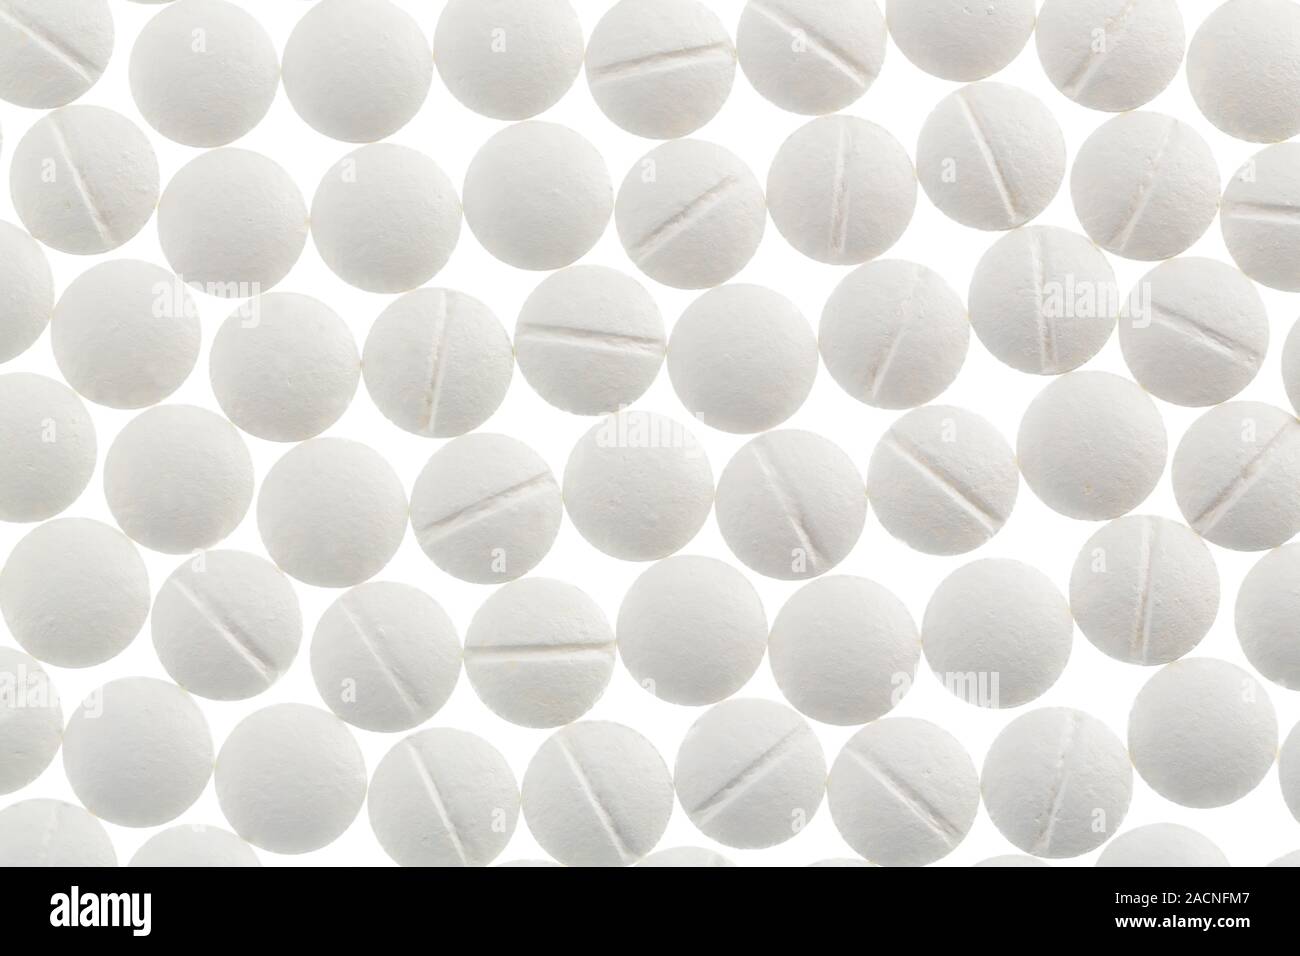 White tablets in abundance Stock Photo